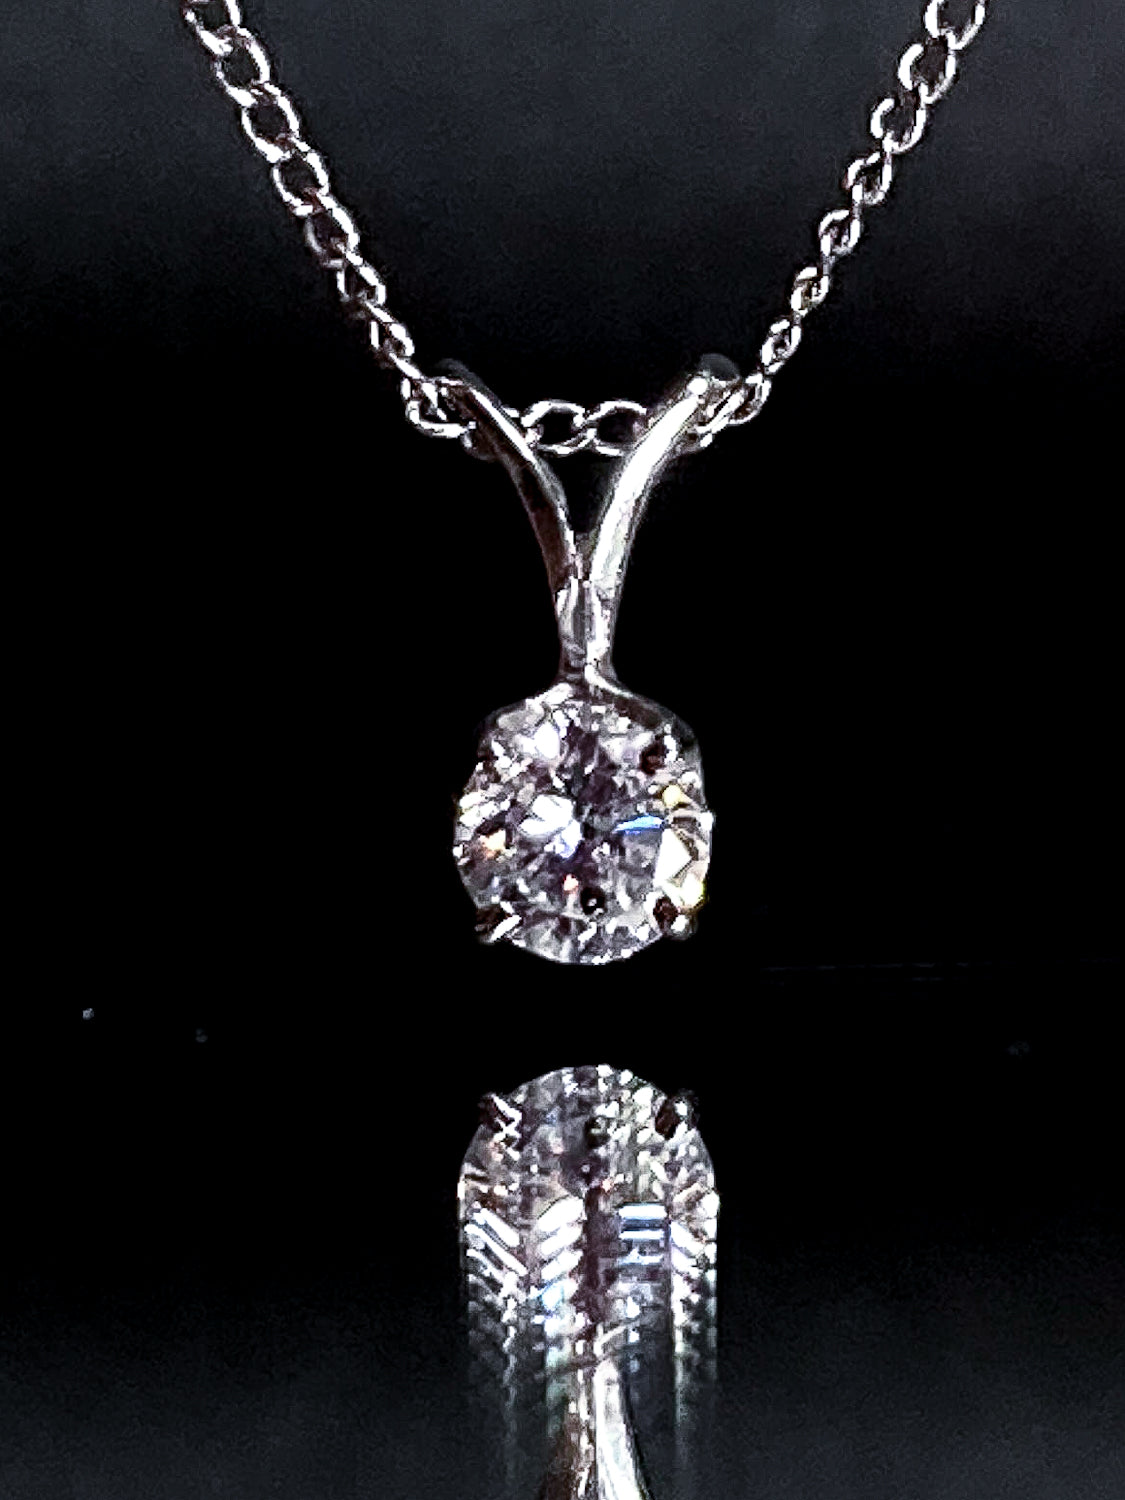 14K White Gold Solitaire Brilliant Diamond Drop Pendant Necklace Close Up Pendant on Black Background